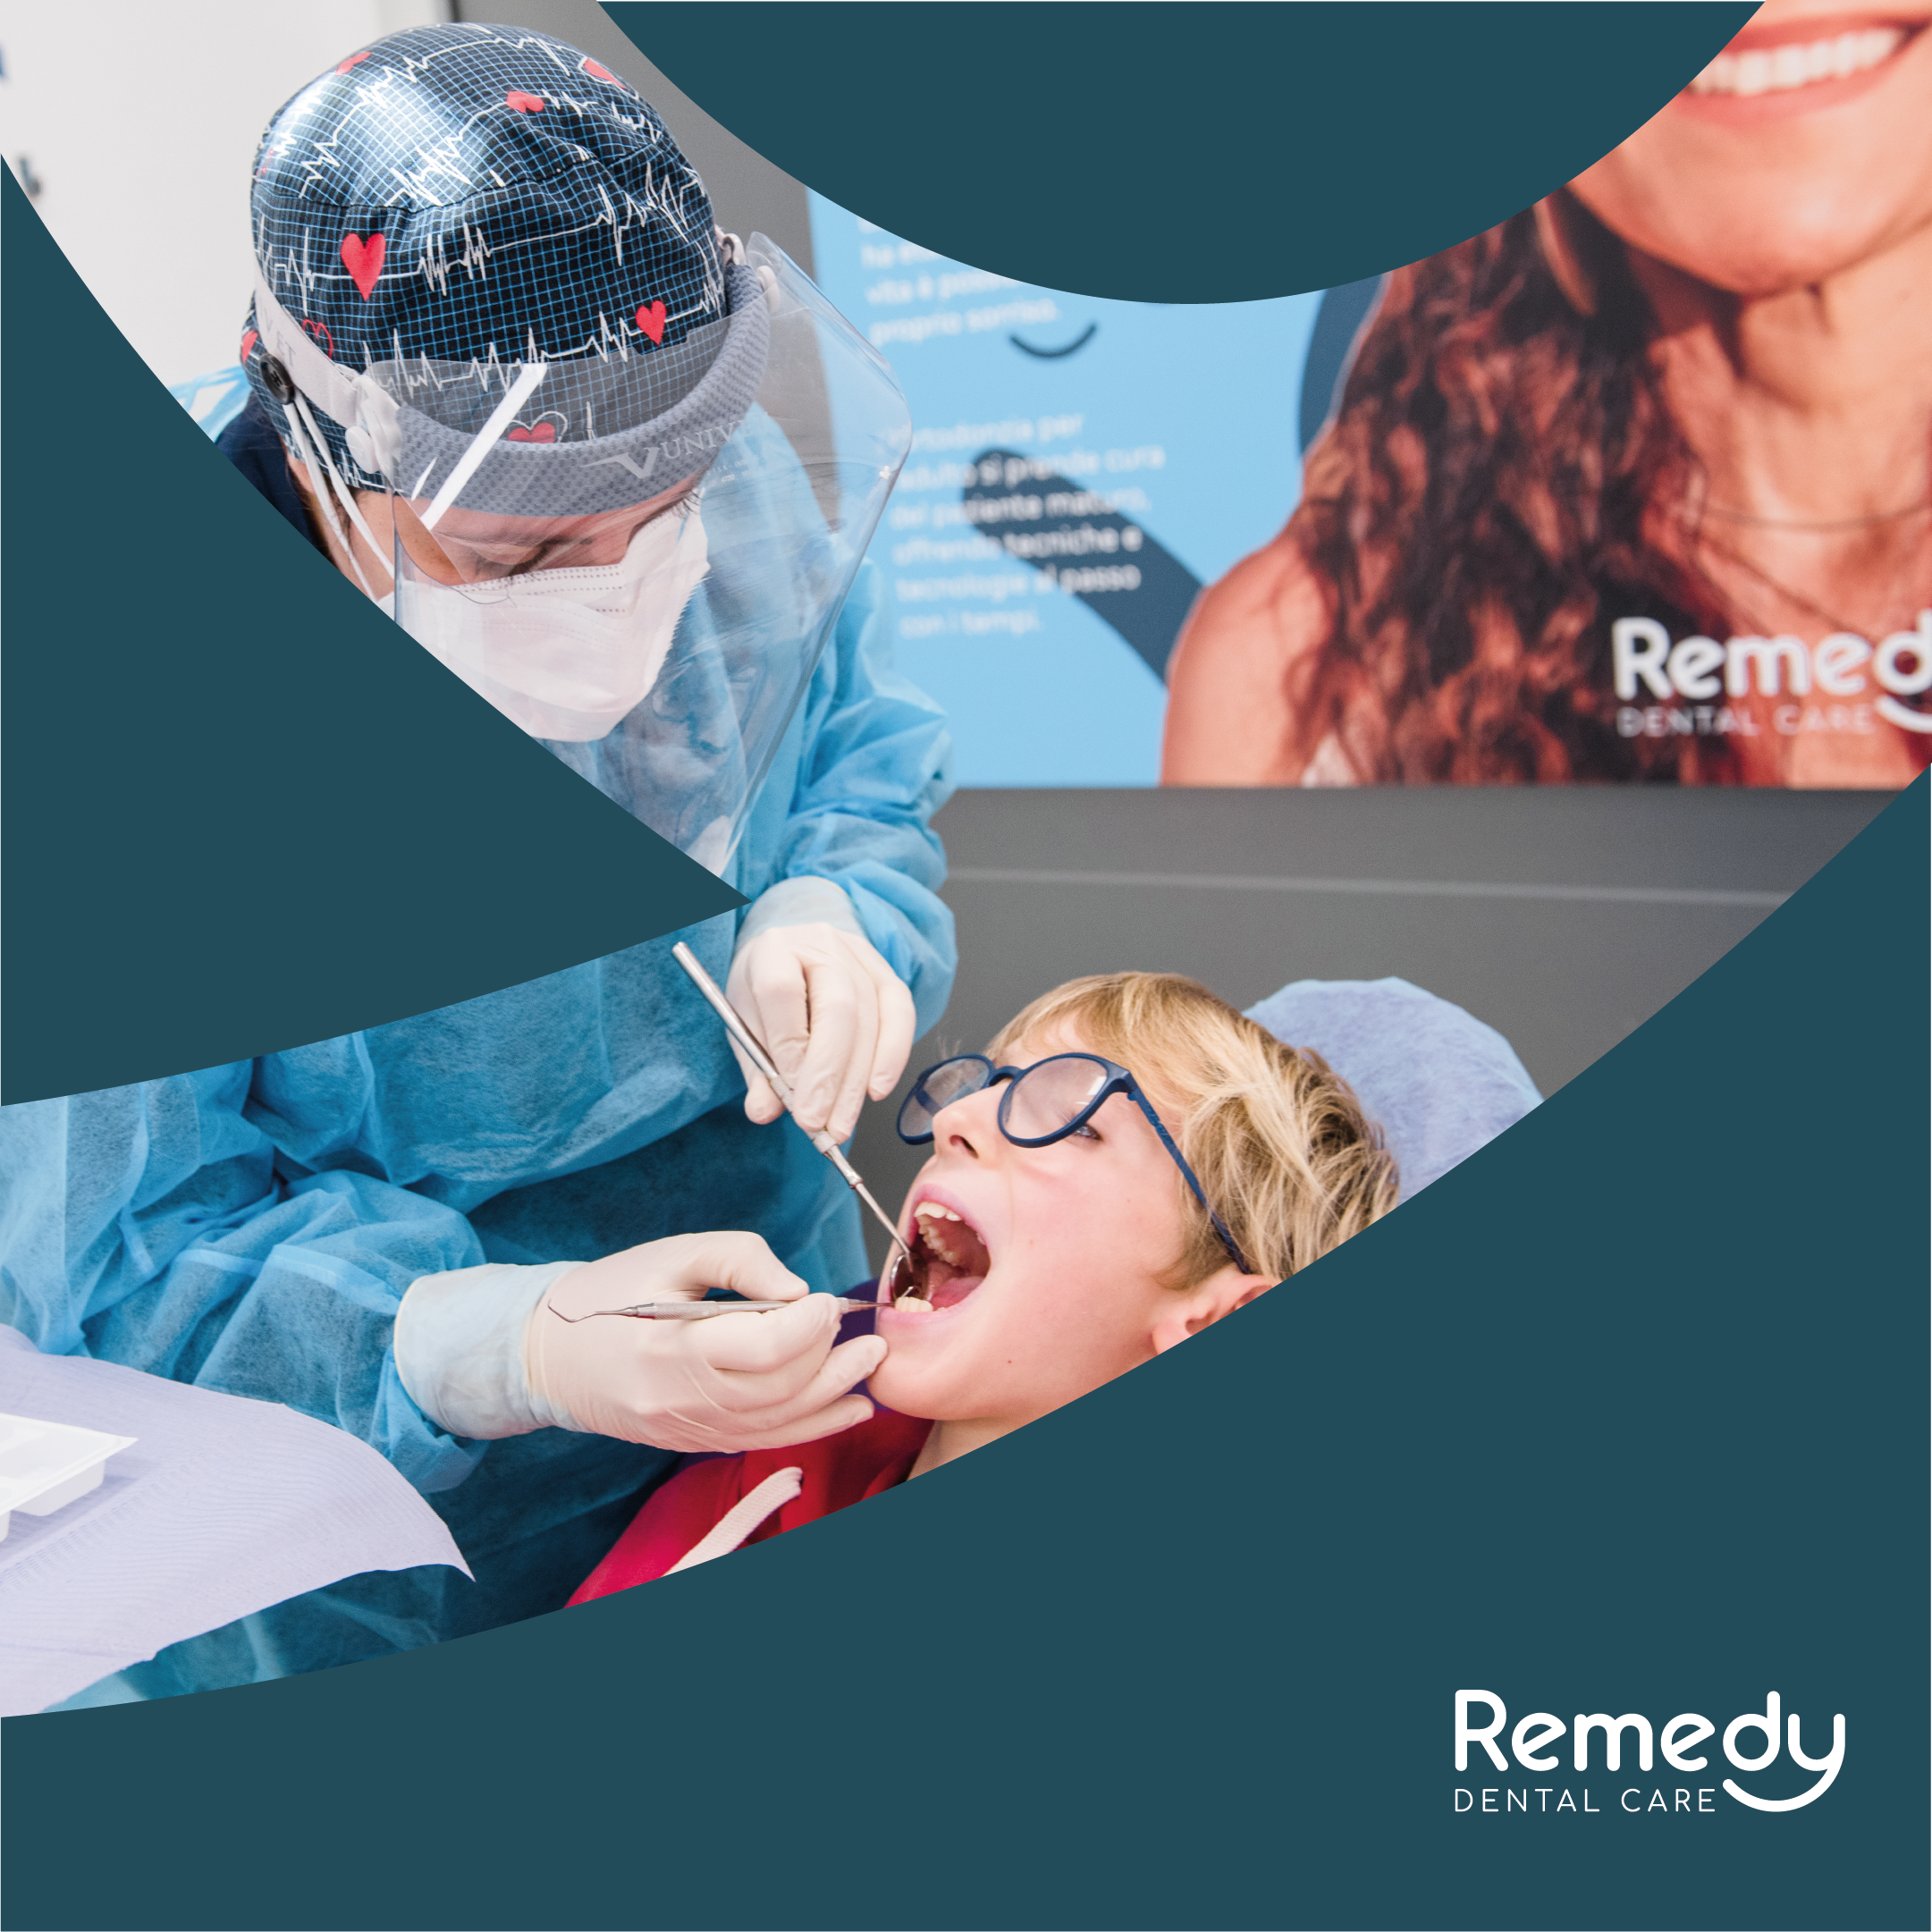 Remedy Dental Care